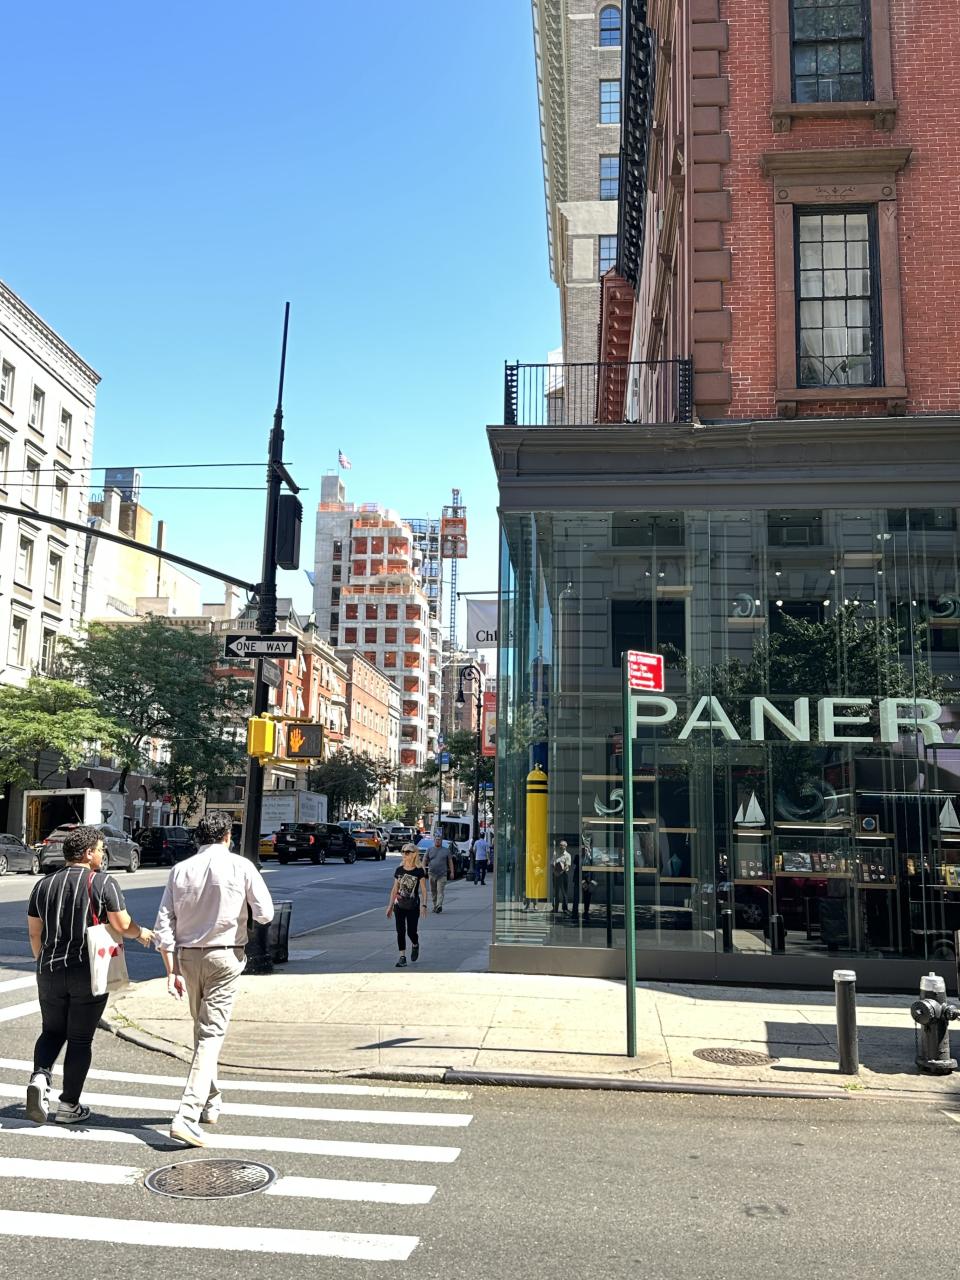 On Madison Avenue, the Panerai store; Giorgio Armani complex under construction in the background. Photo by Matt Bauer.